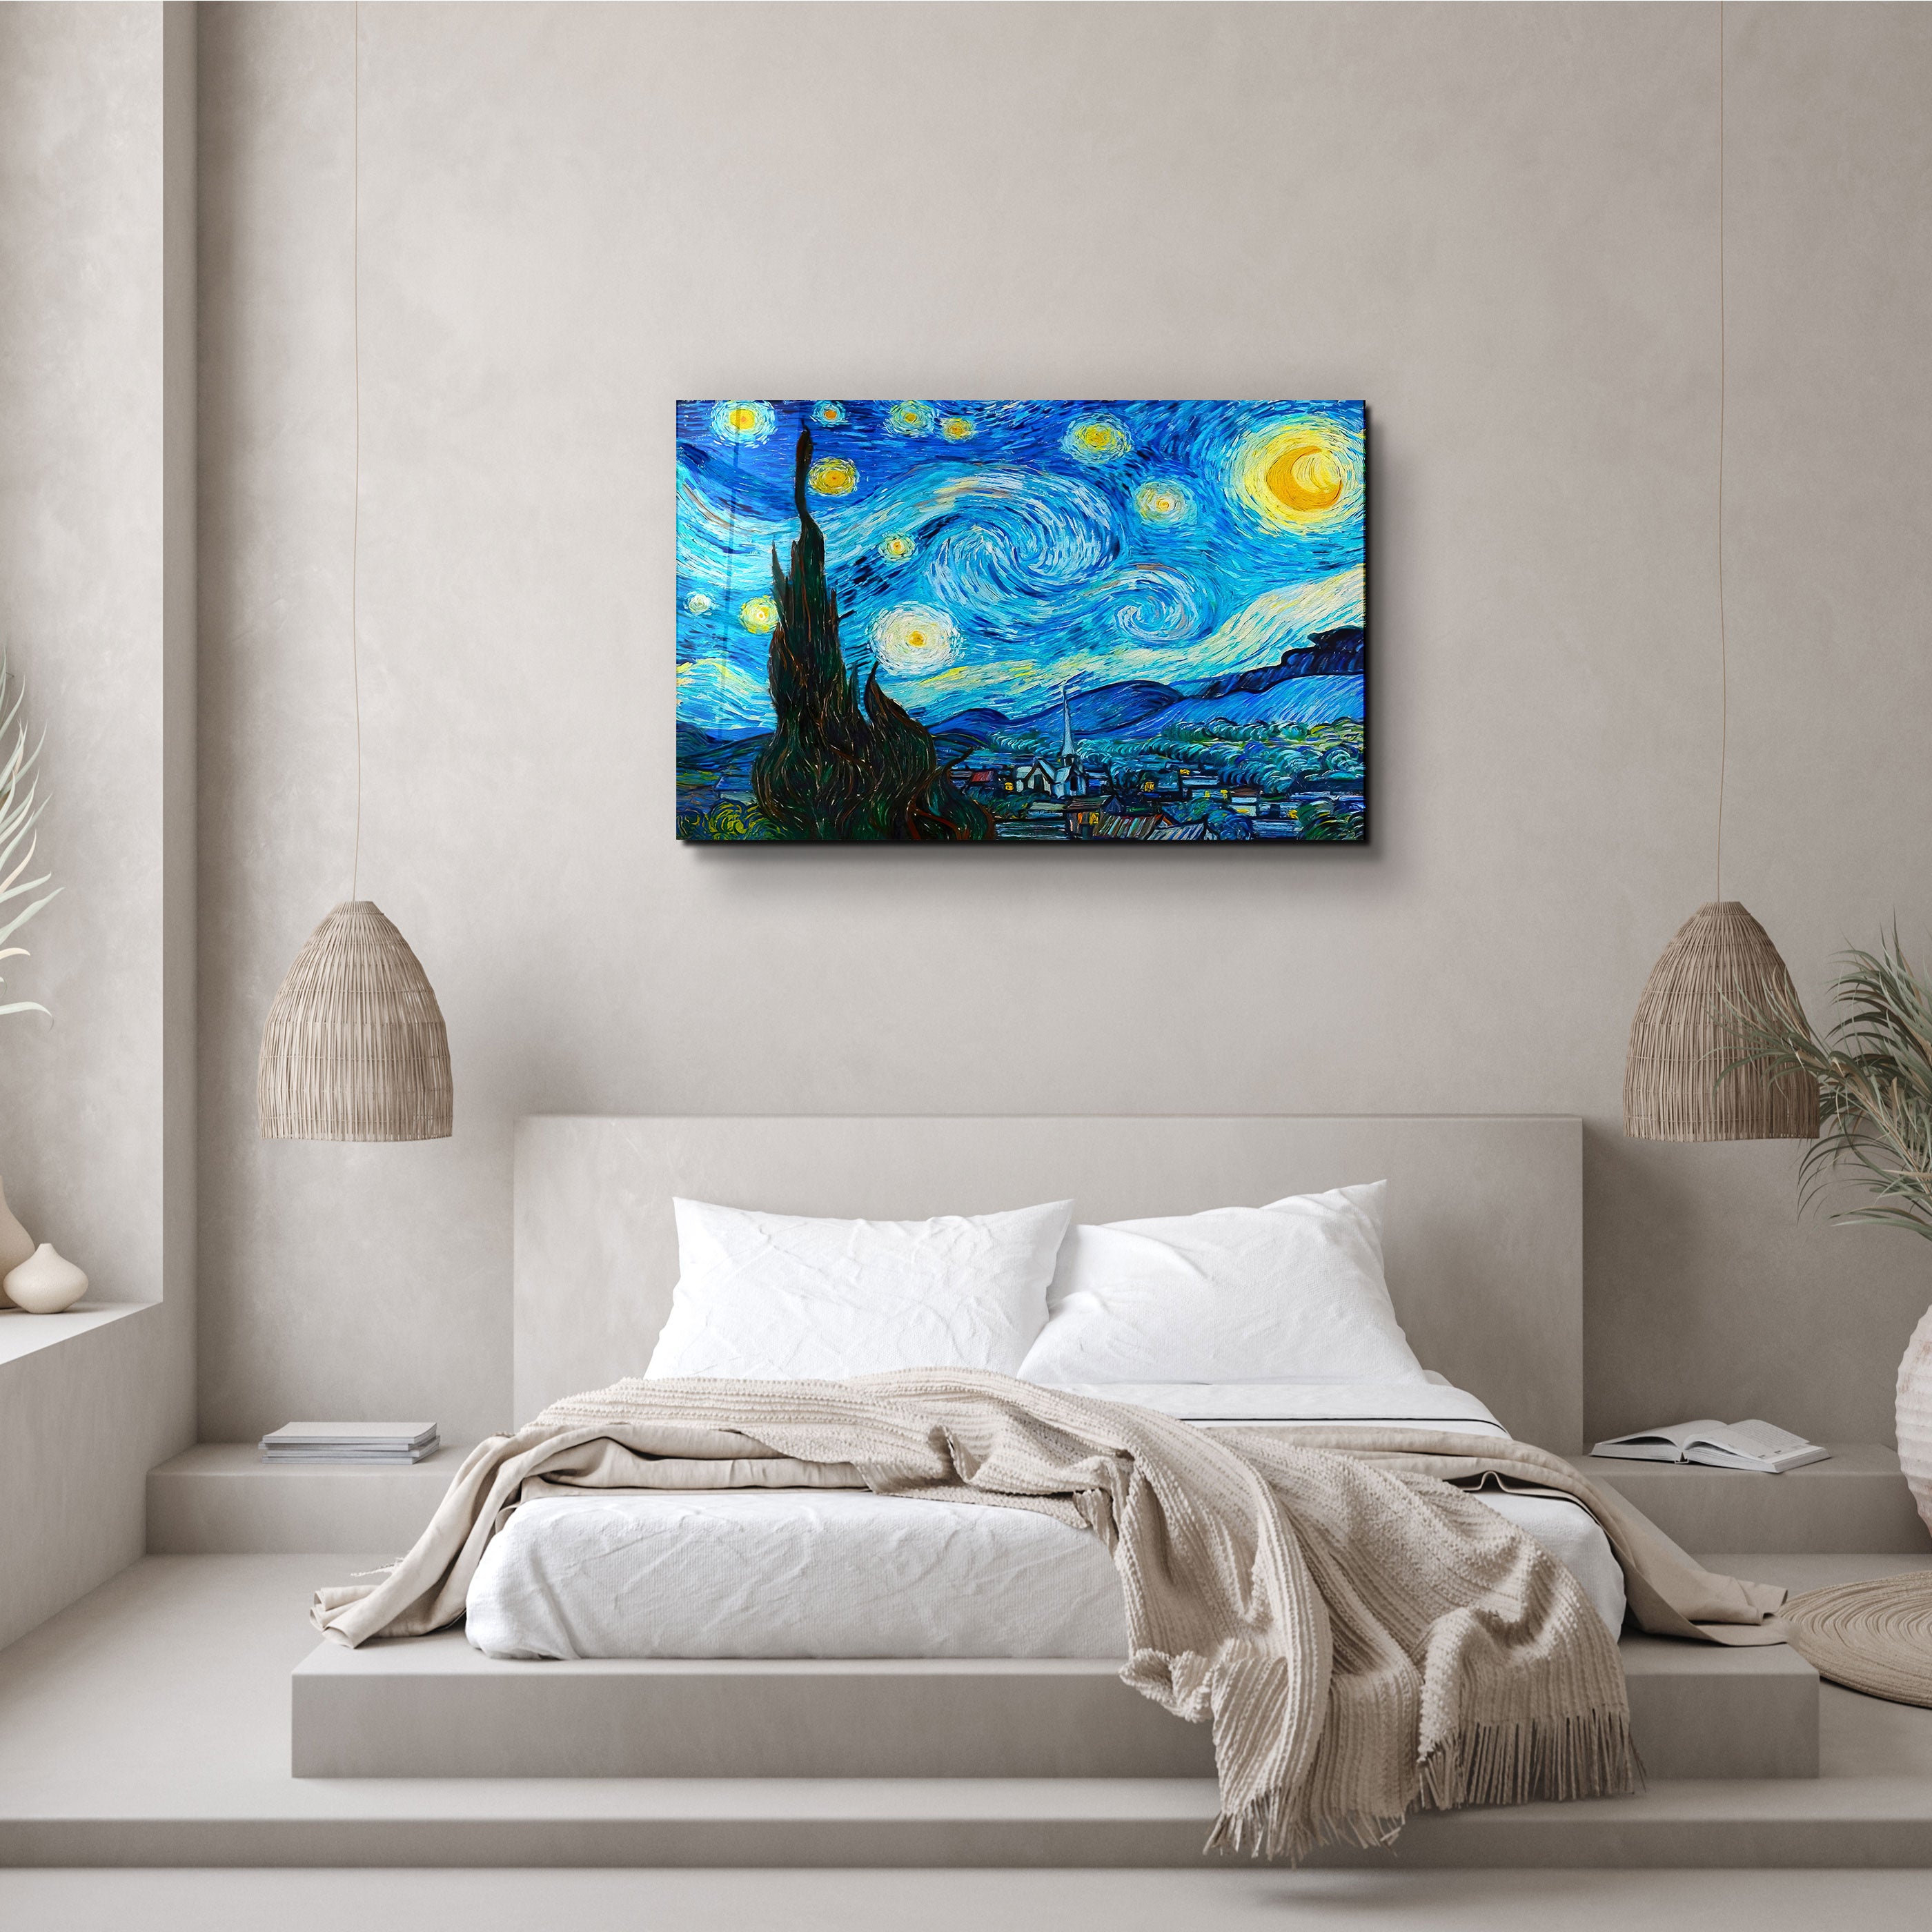 ・"Van Gogh The Starry Night"・Glass Wall Art